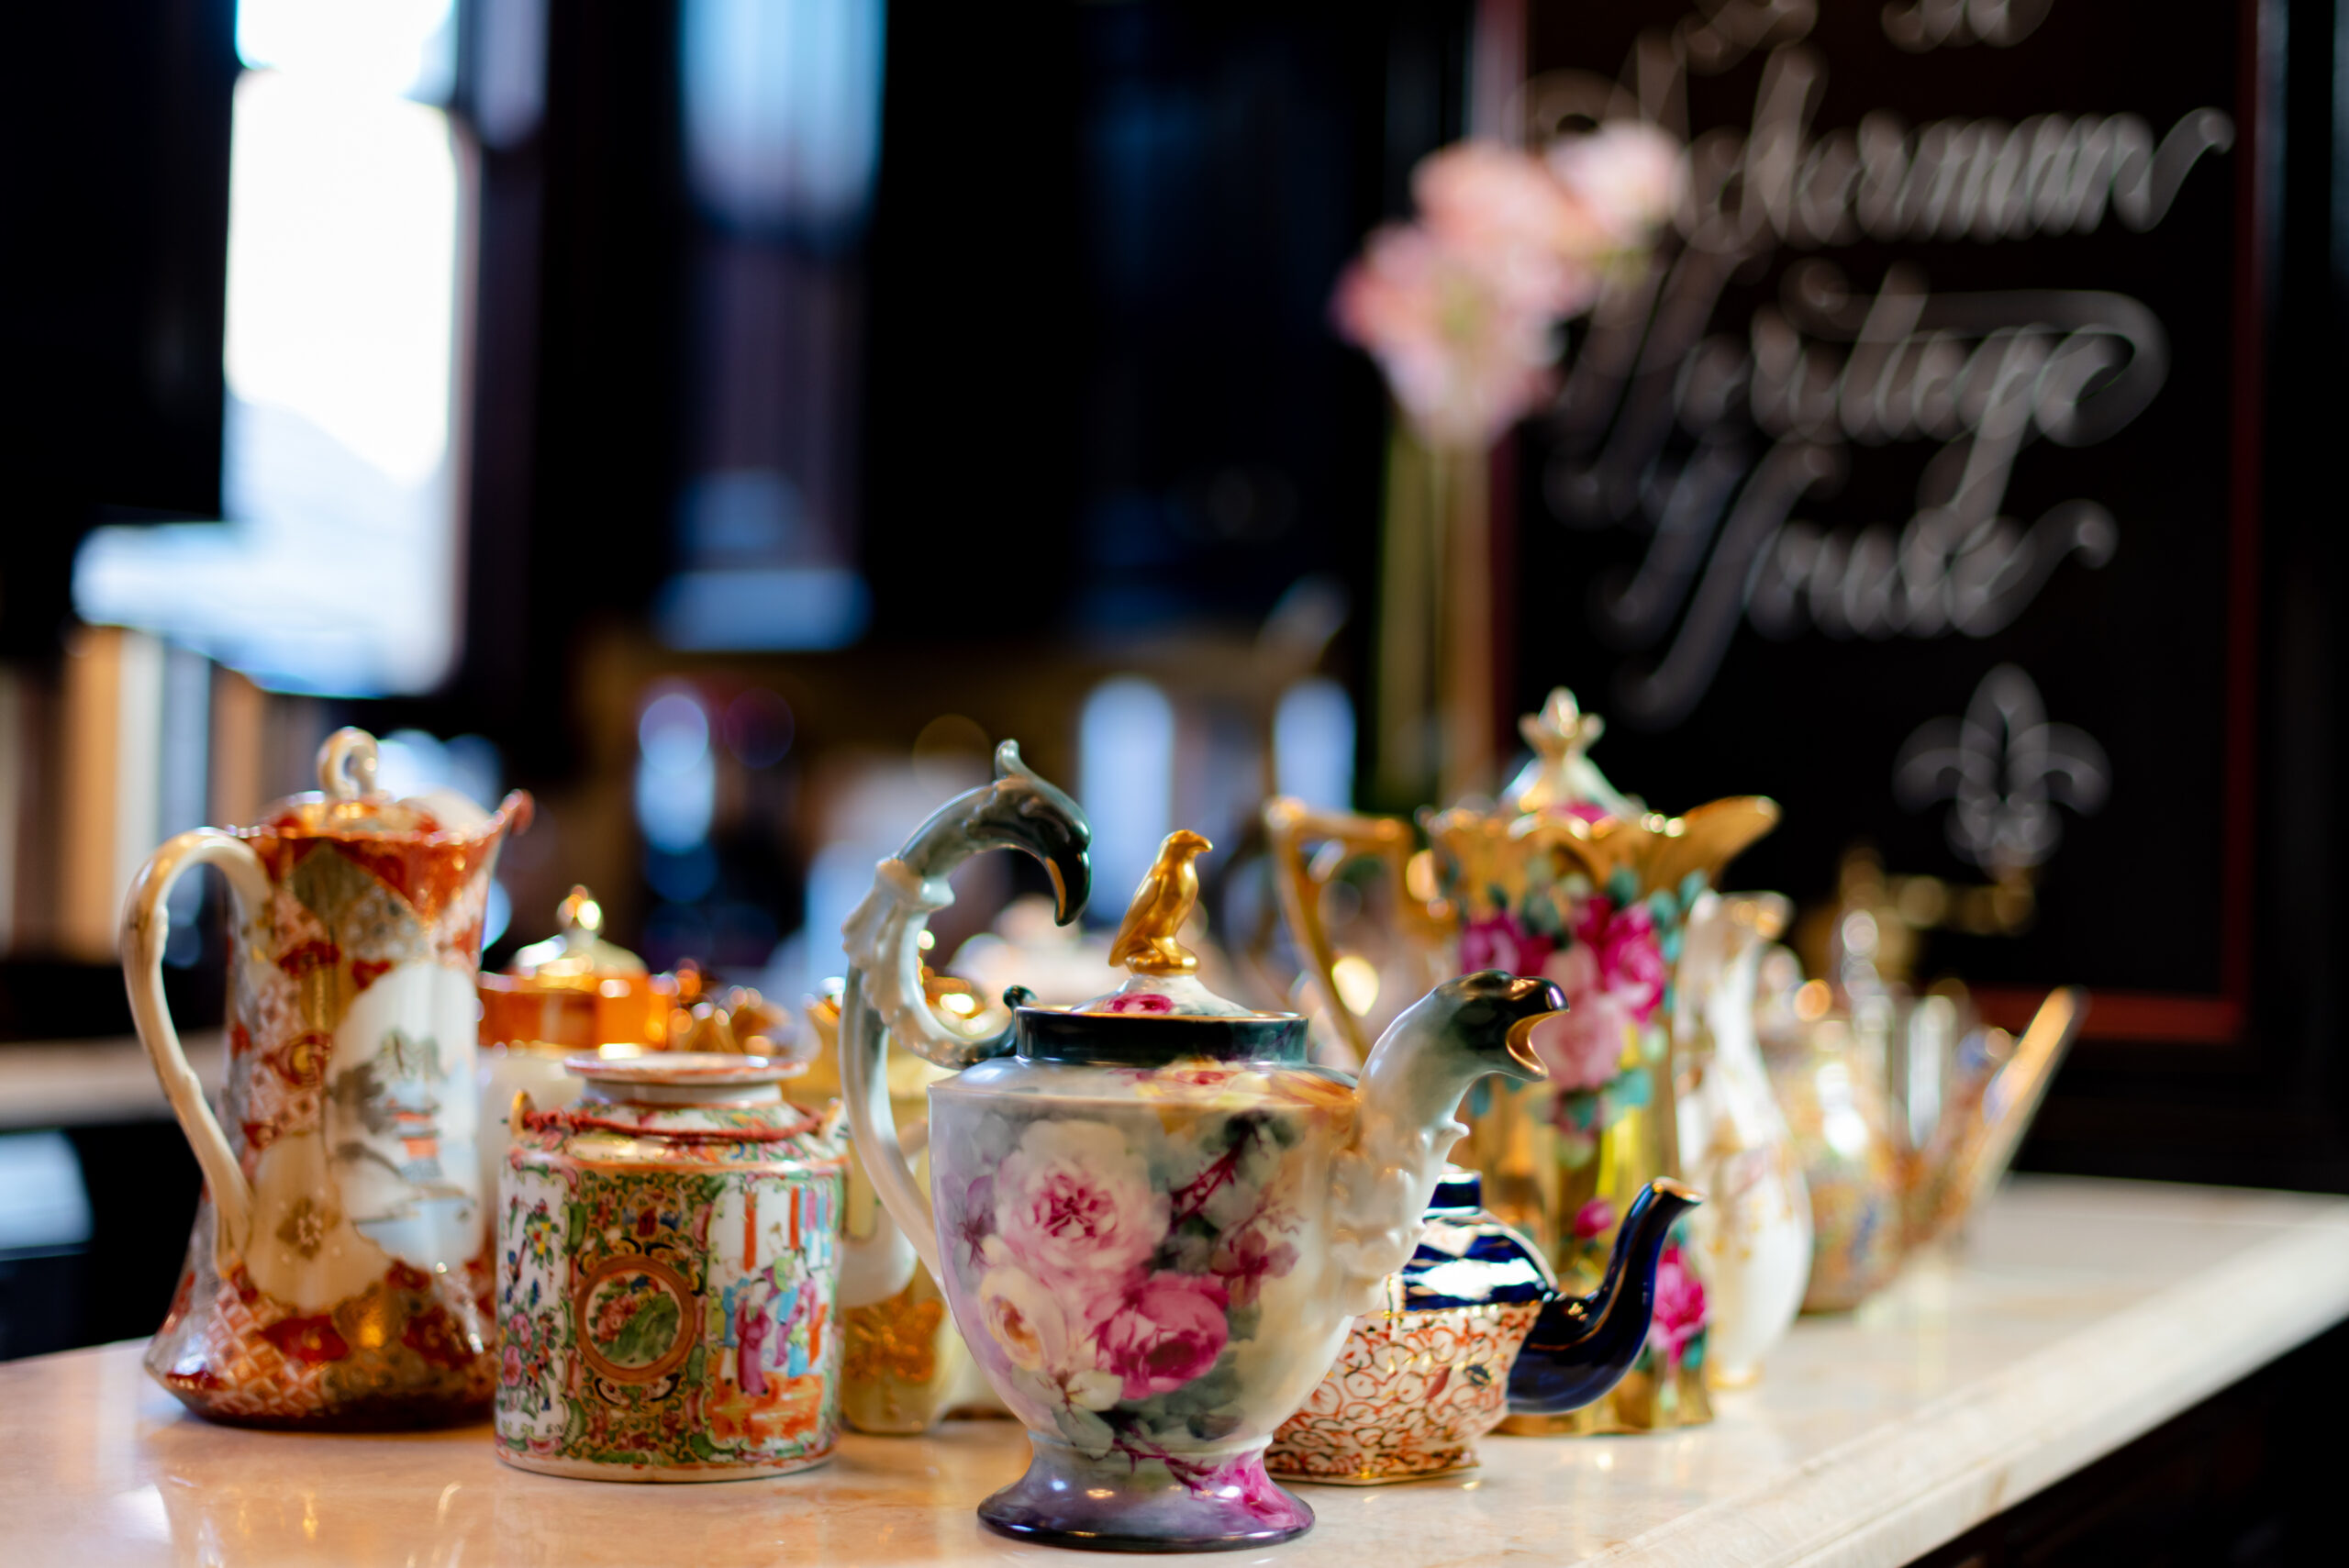 vintage tea set with florals painted on it